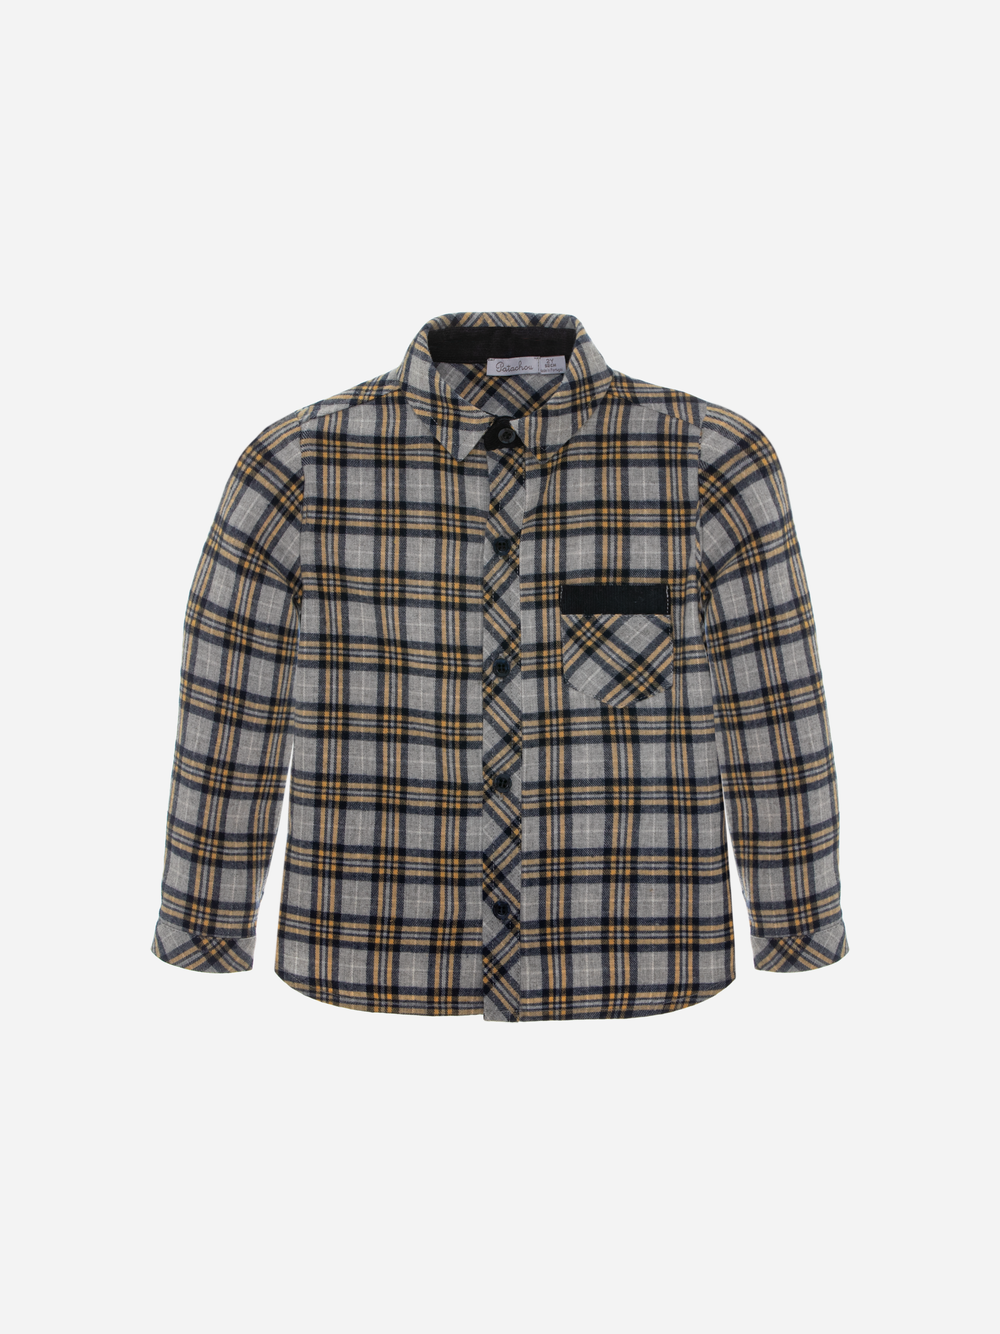 Grey Check Flannel Shirt